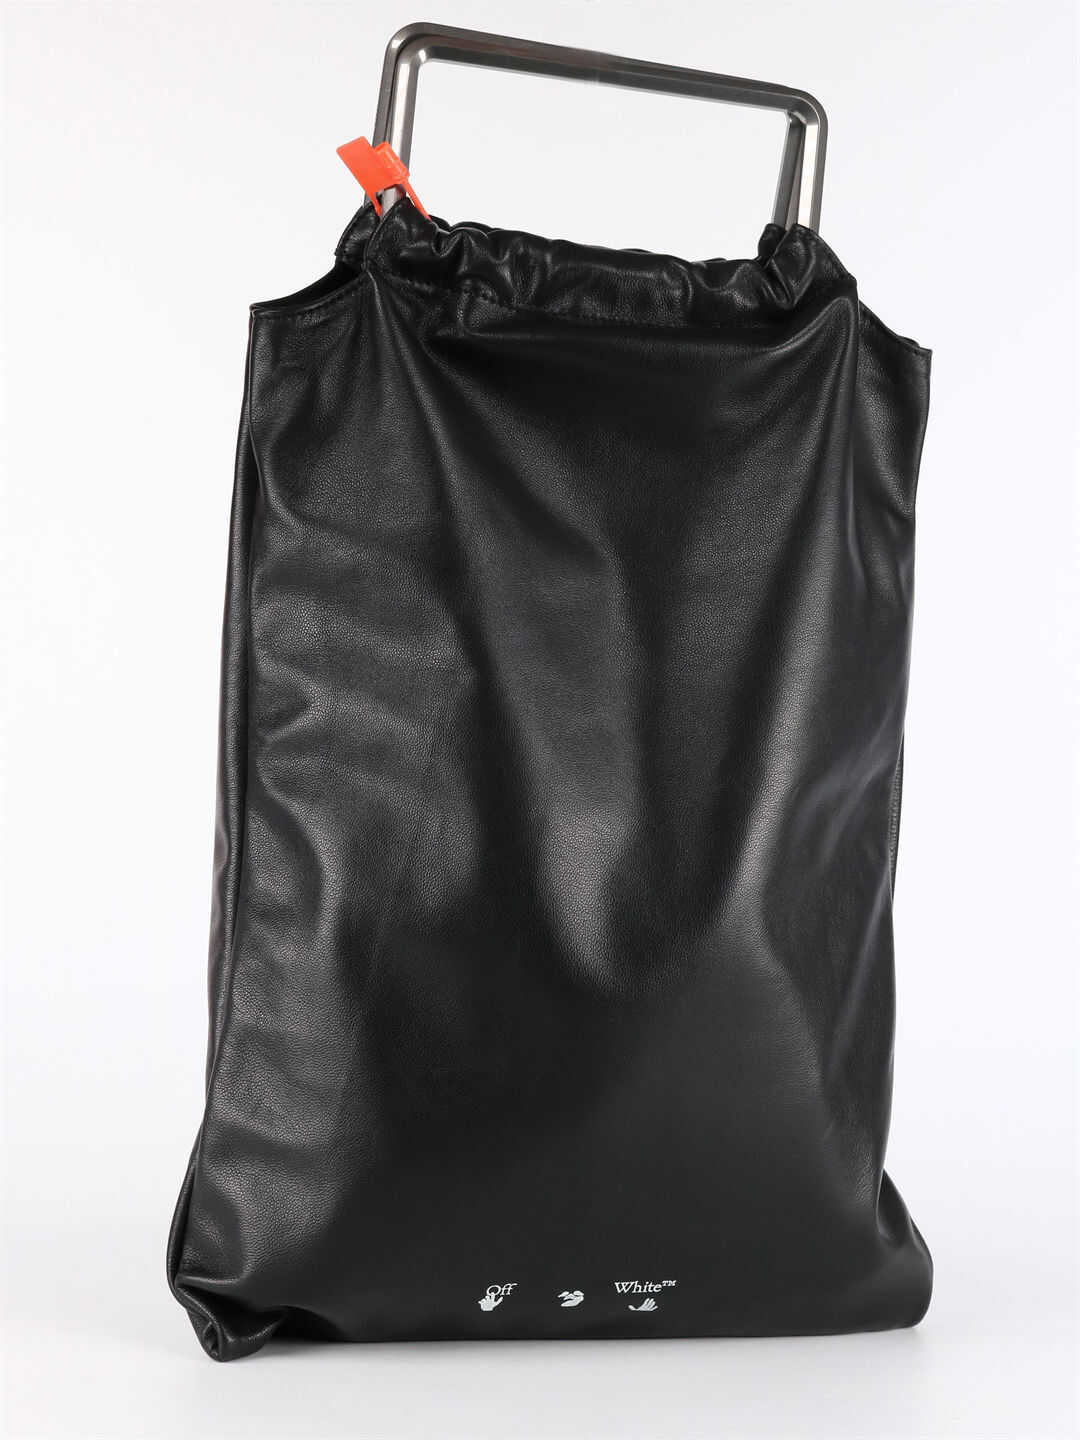 Allen Leather Bag